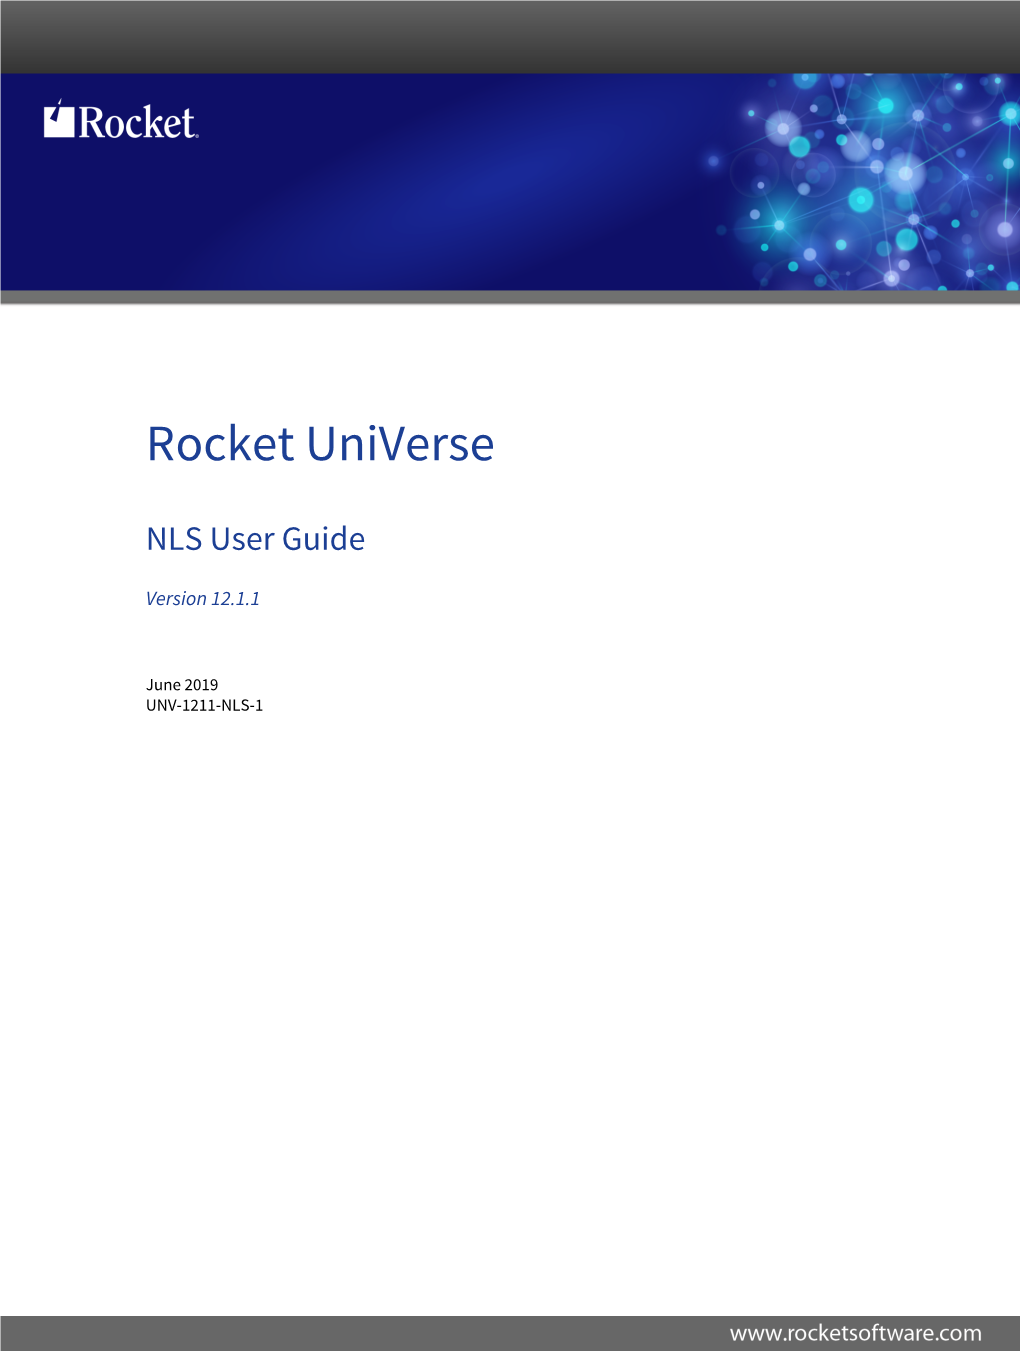 Rocket Universe NLS Guide